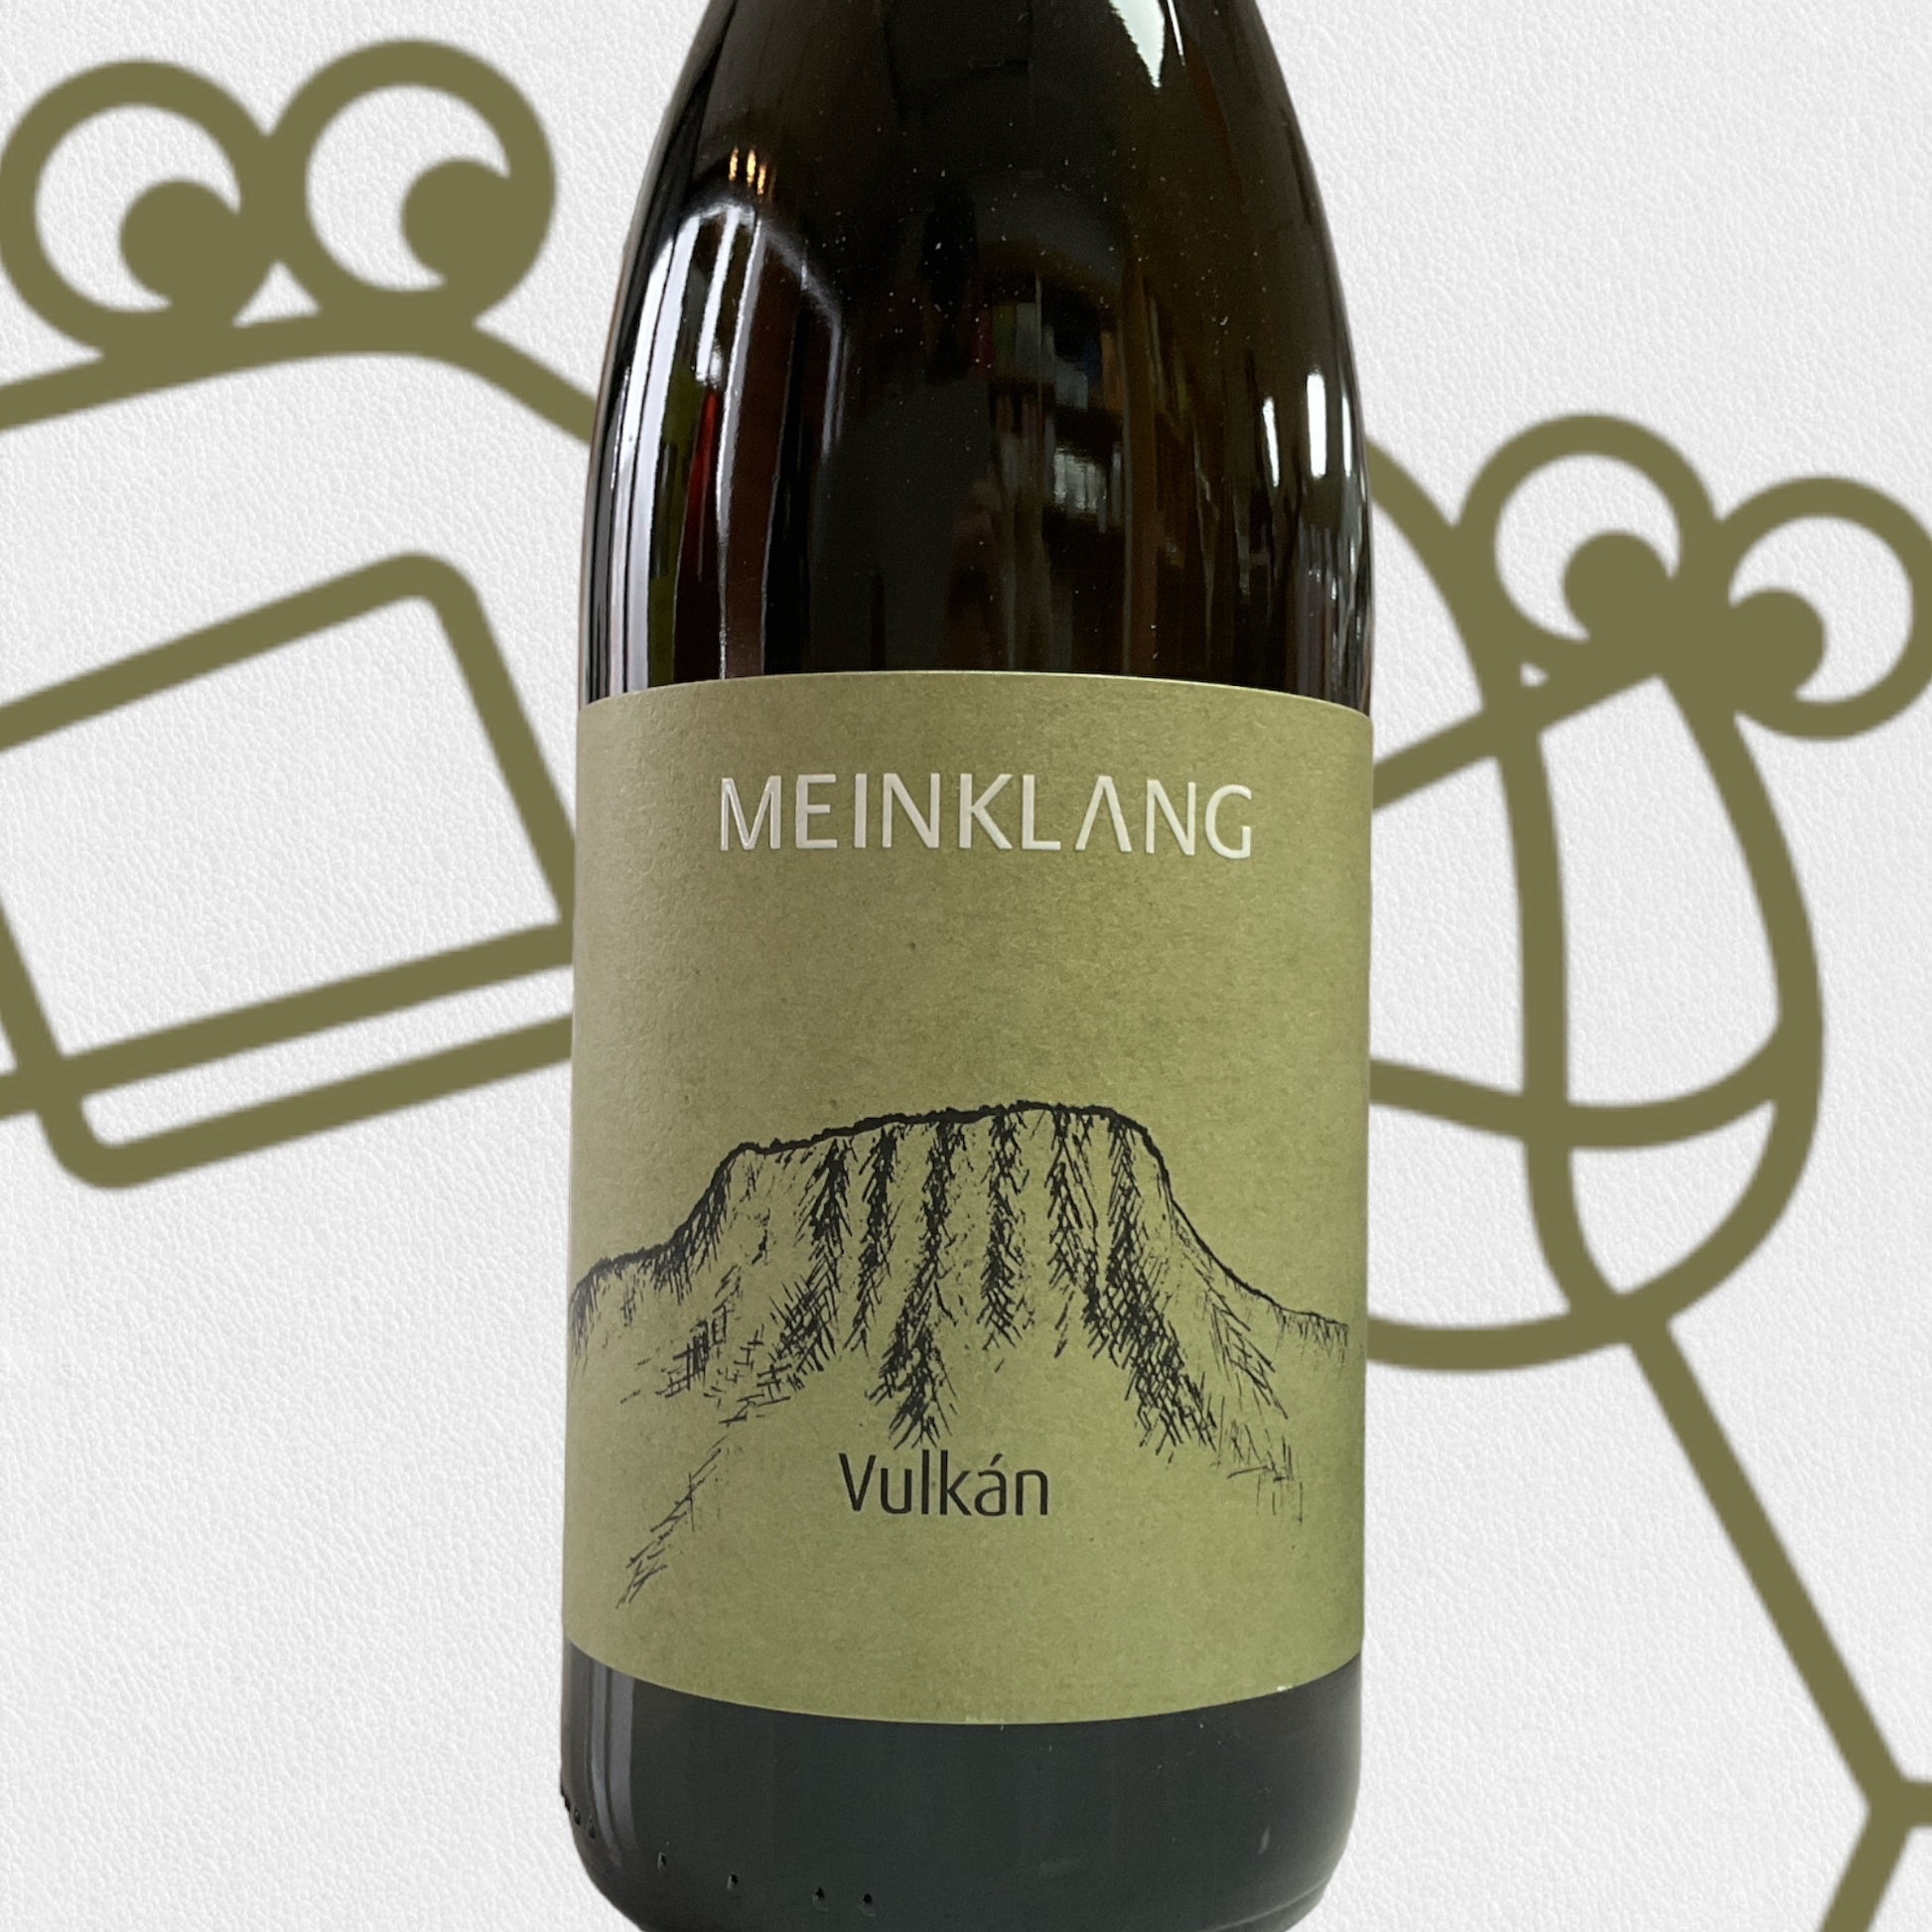 Meinklang 'Vulkan No. 2' 2020 Österreich, Austria - Williston Park Wines & Spirits